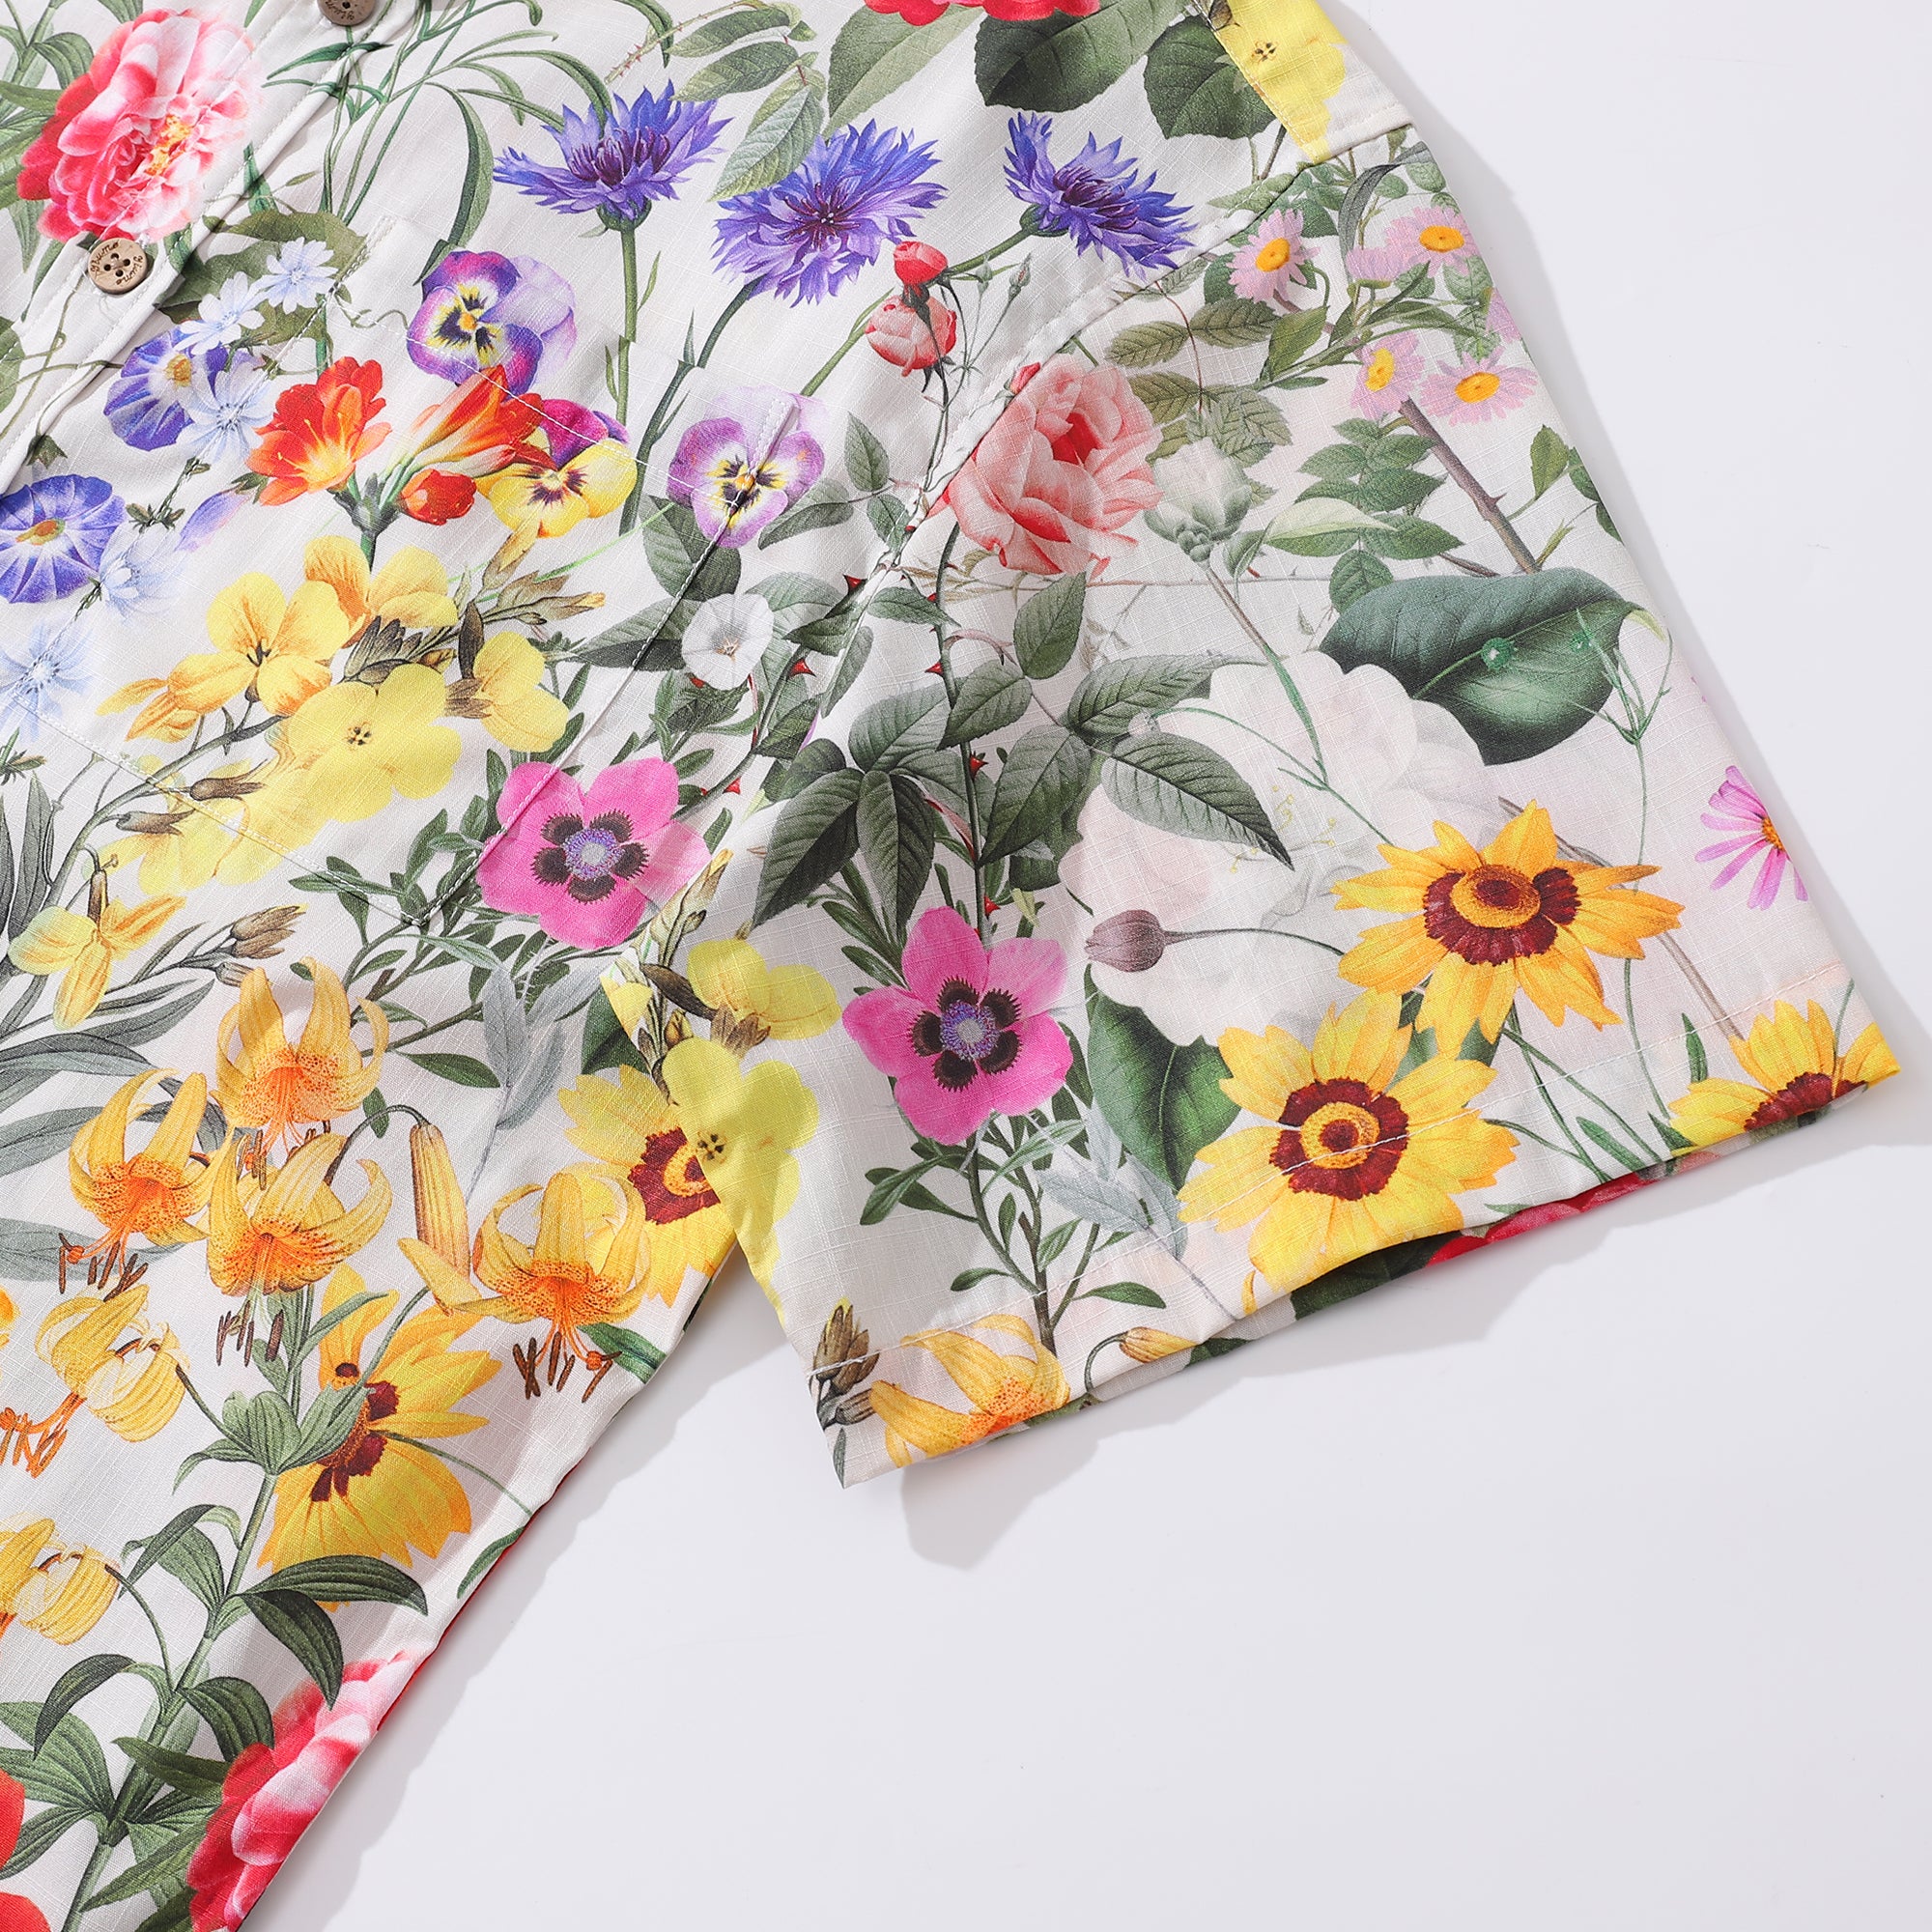 Floral Hawaiian Shirt For Men Colorful Button-down Shirt Short Sleeve 100% Cotton Shirt